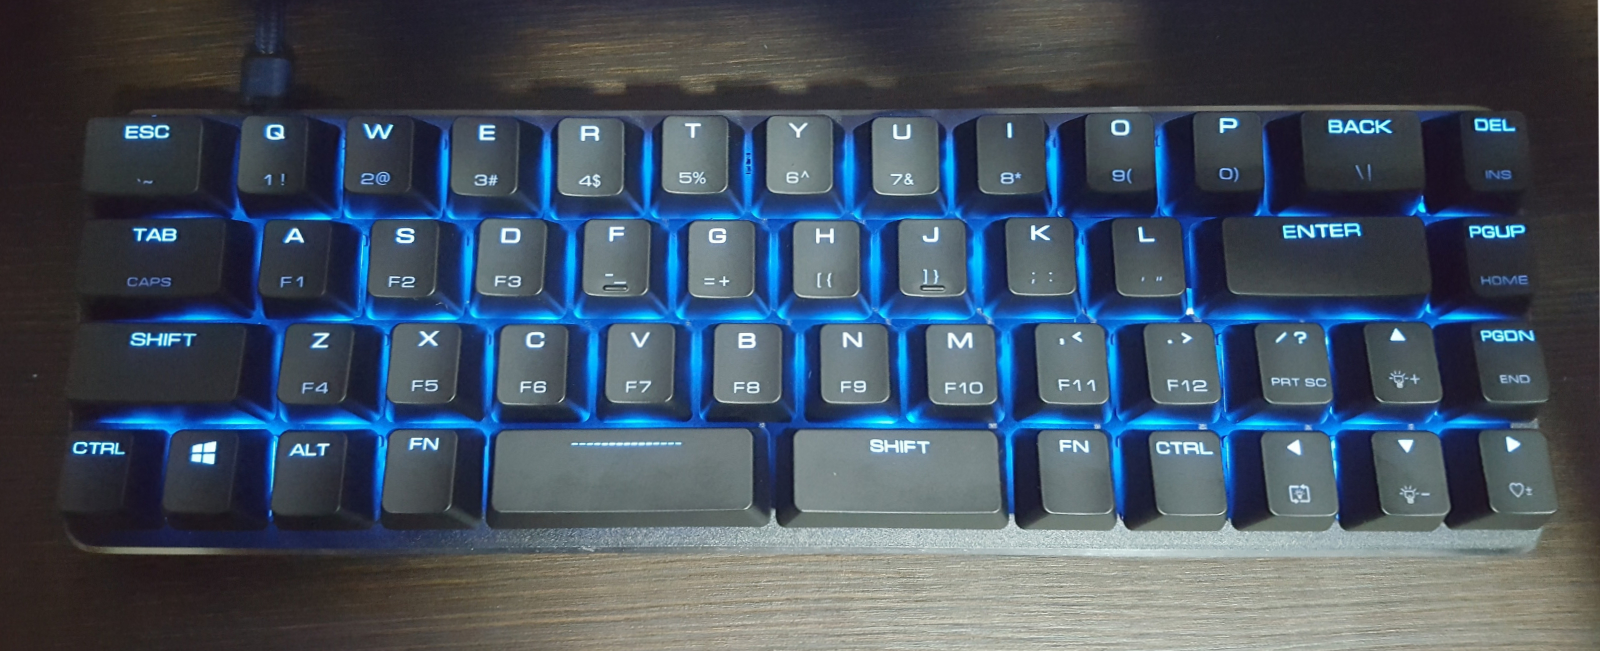 Figure 1: Magicforce 49 keyboard layout